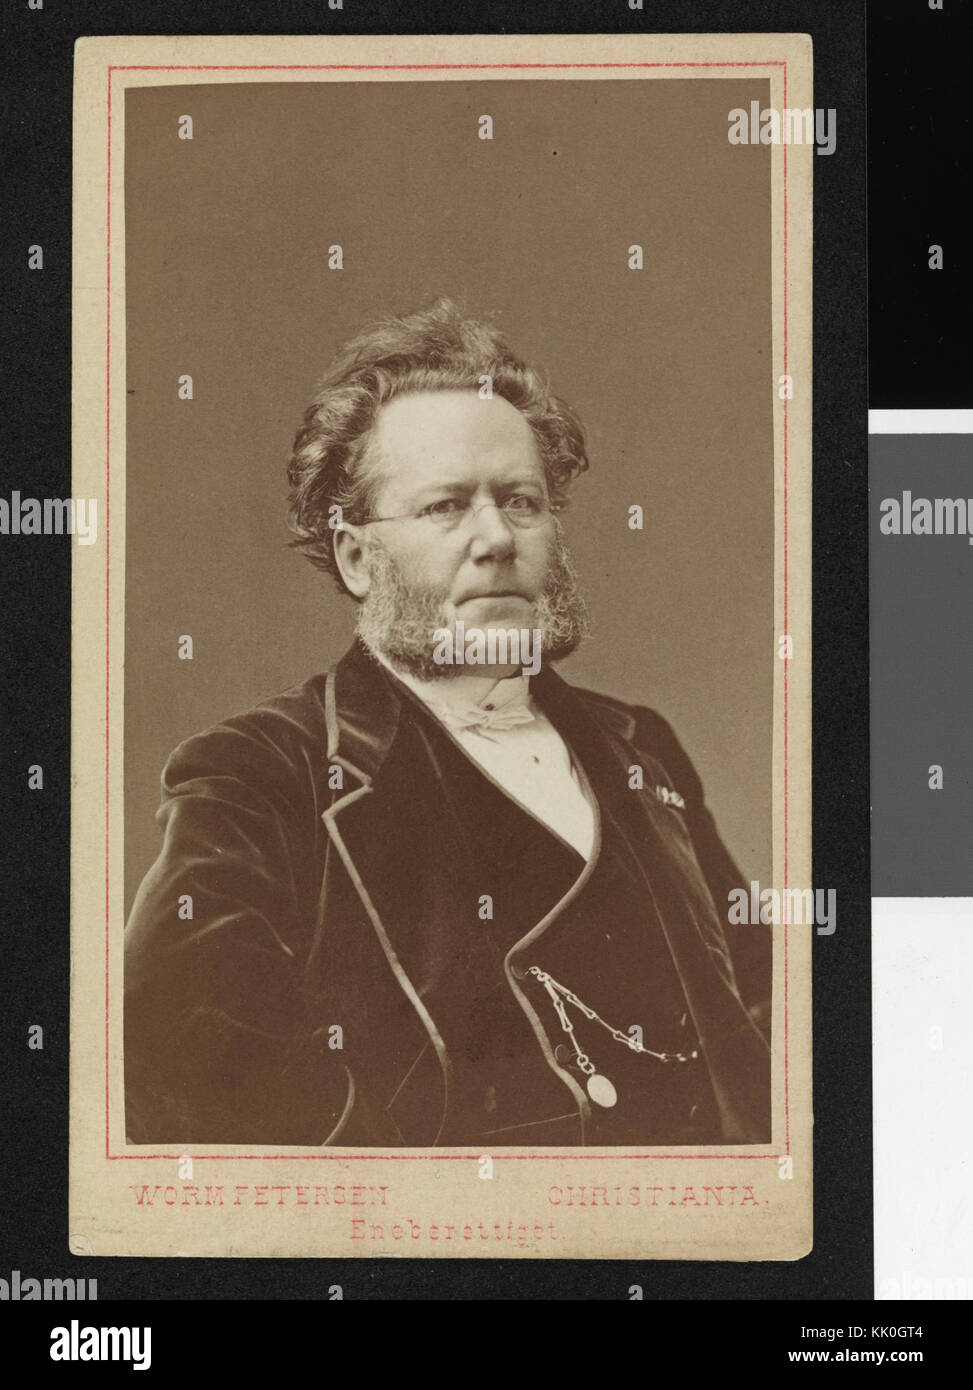 Portrett av Henrik Ibsen, Christiania, 1874 Keine nb DigiFoto-Maker 20160223 00026 bldsa ib 0288 Stockfoto